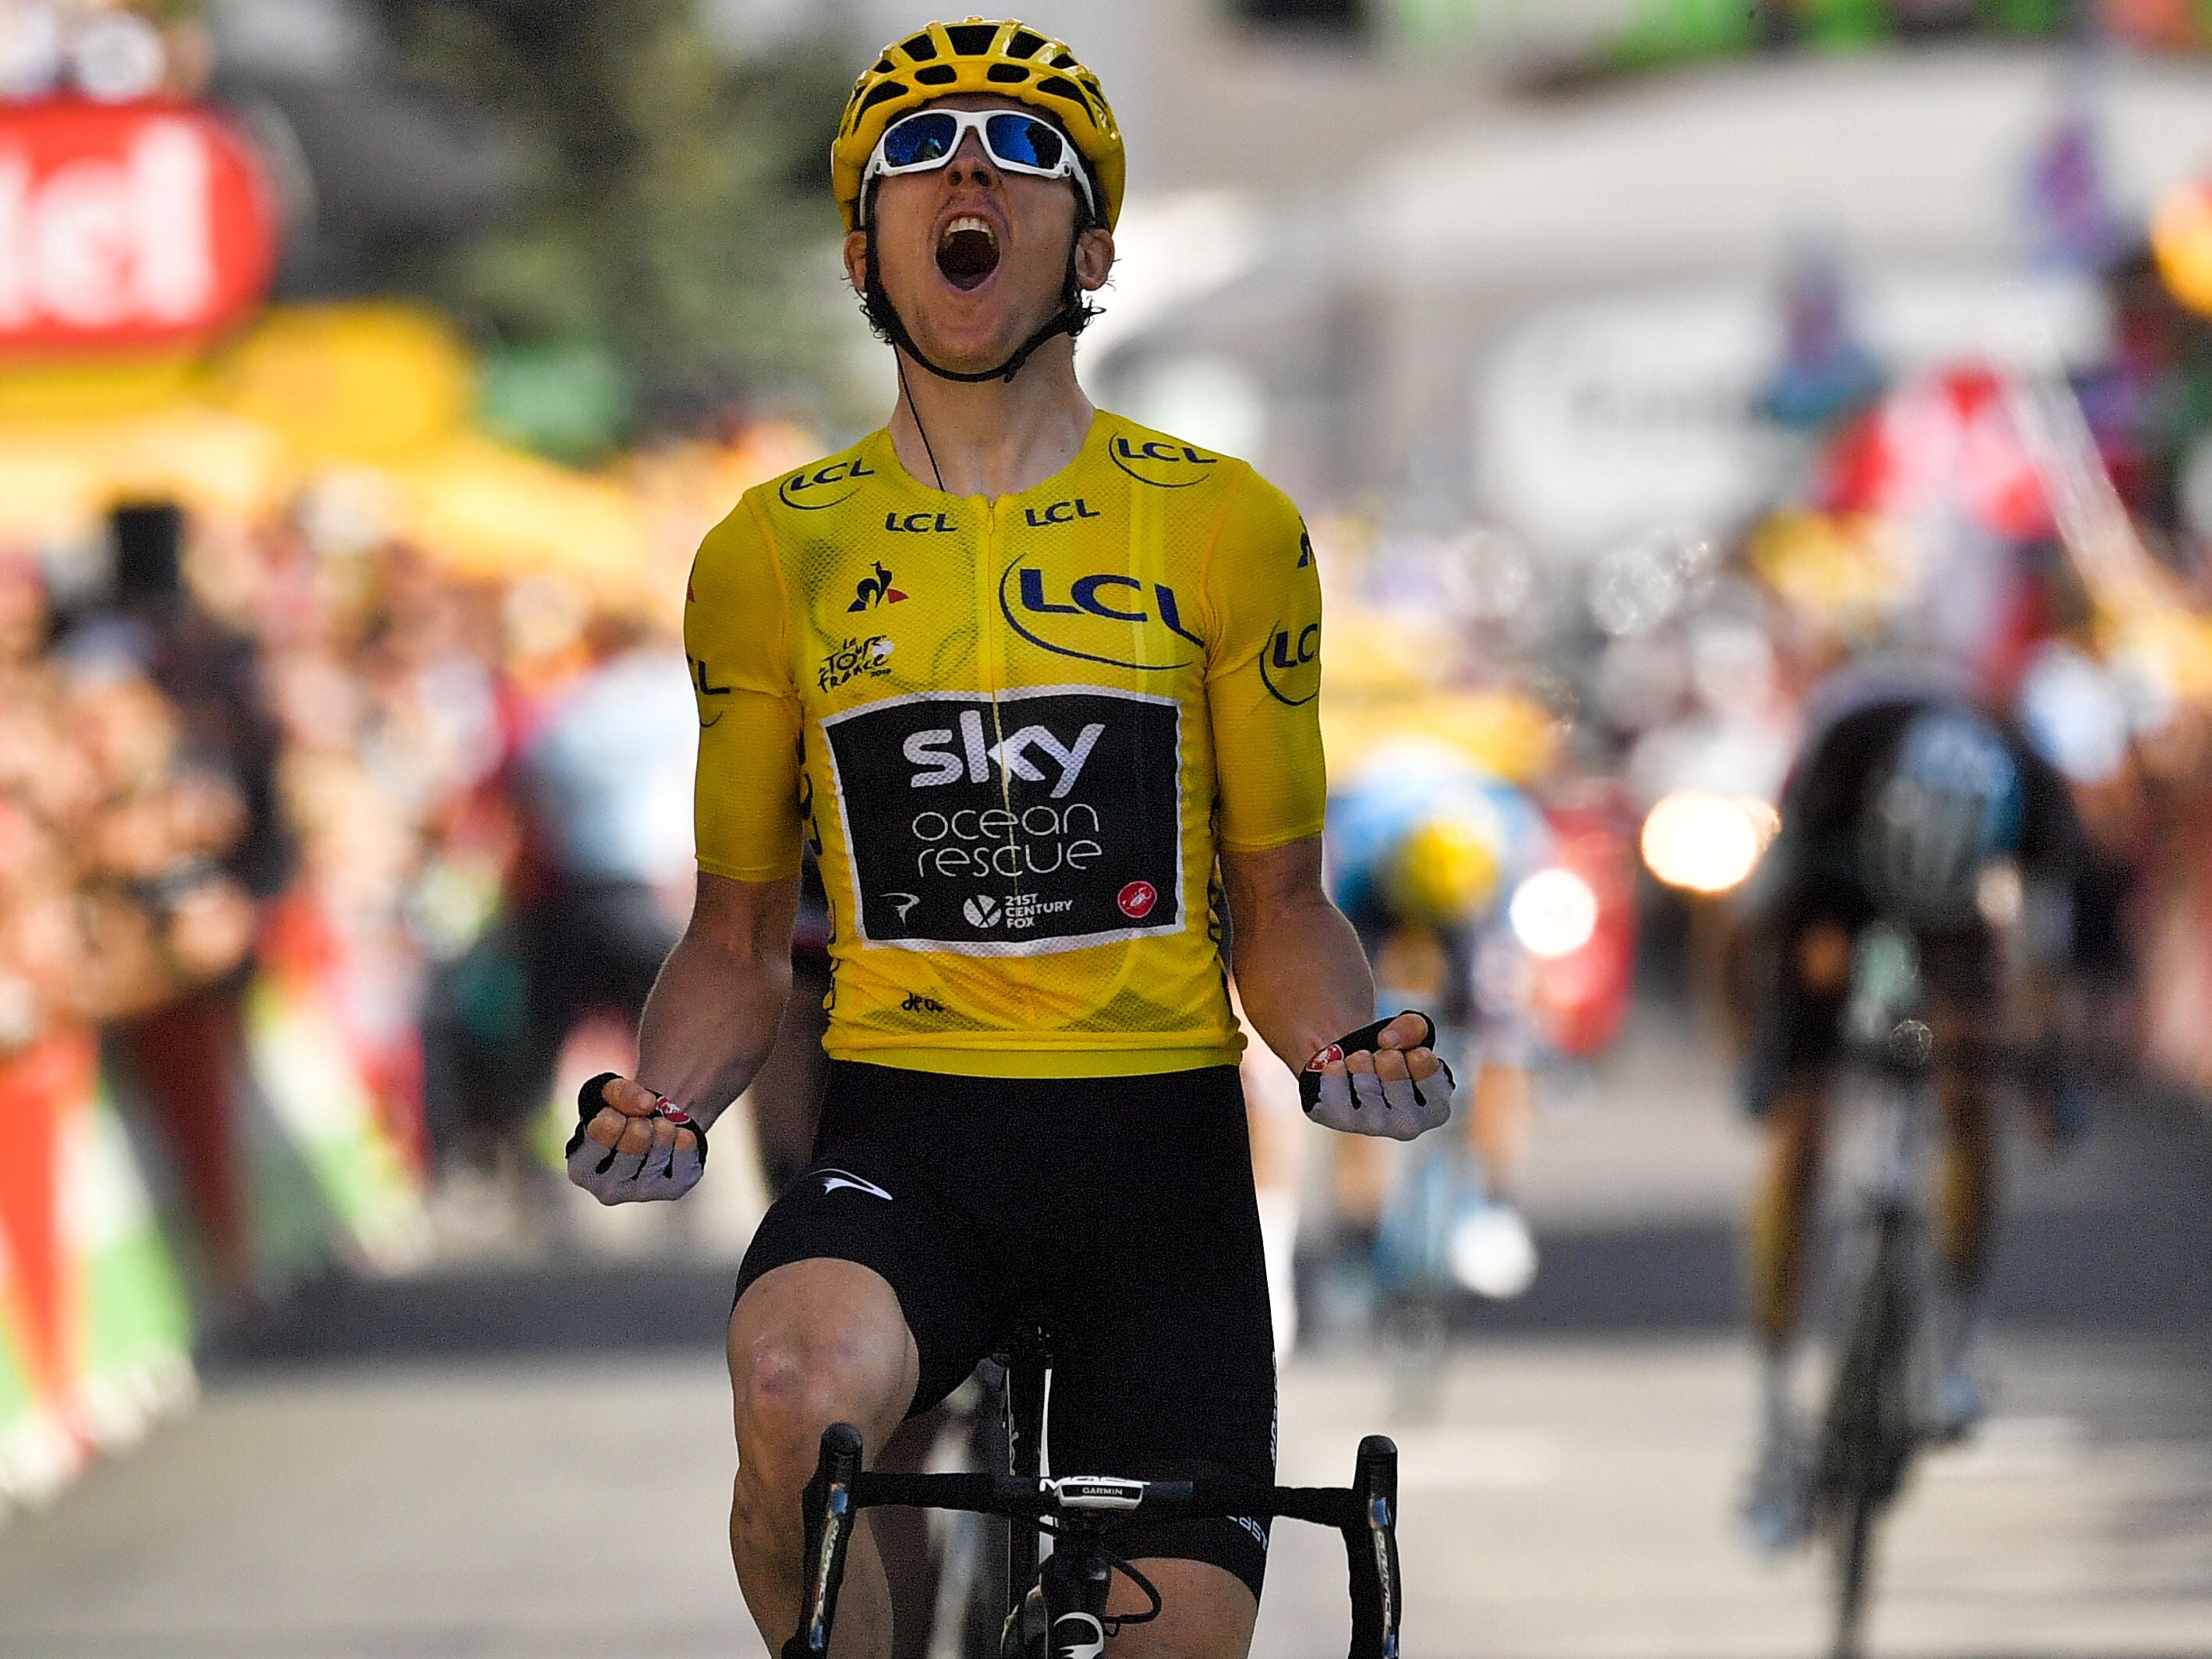 Thomas won the Tour de France in 2018